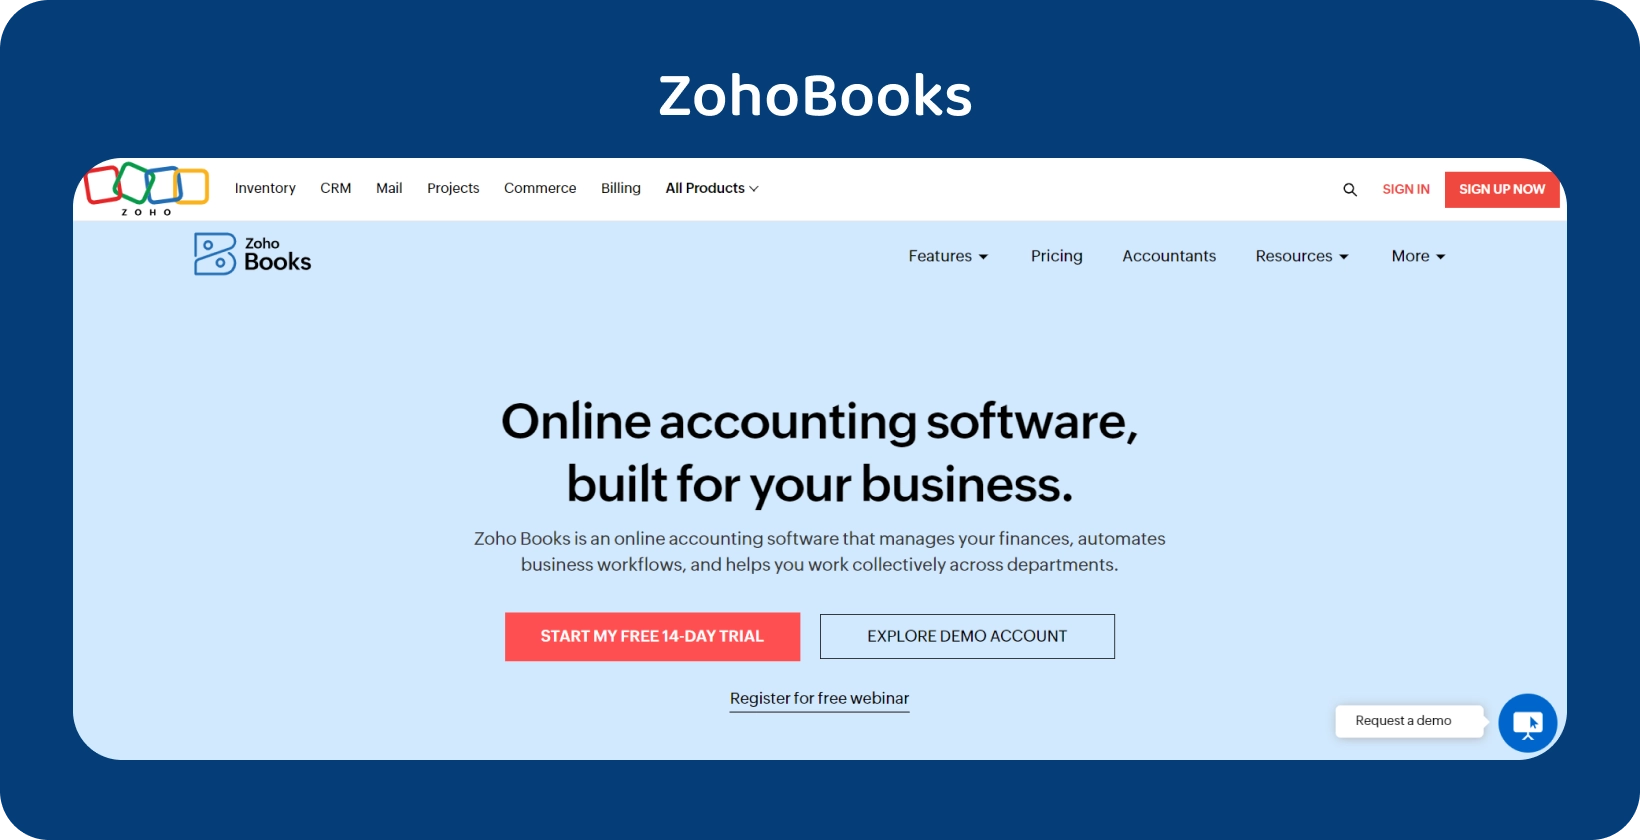 Zoho Books 主页横幅突出了其为简化运营而量身定制的业务在线会计软件